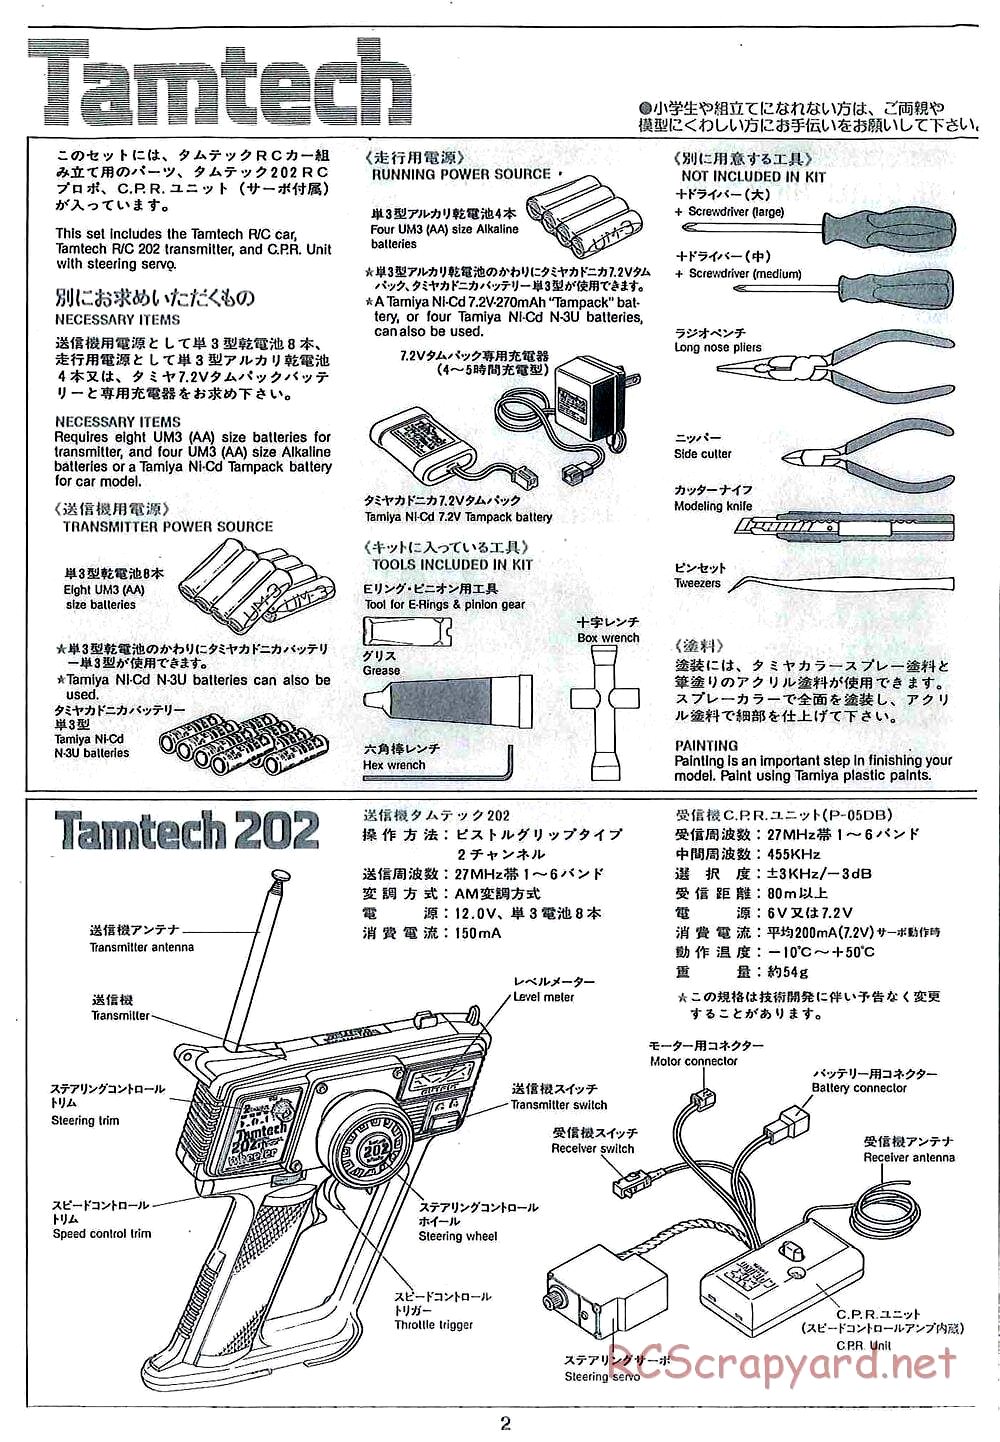 Tamiya - TamTech - F1 Chassis - Manual - Page 2